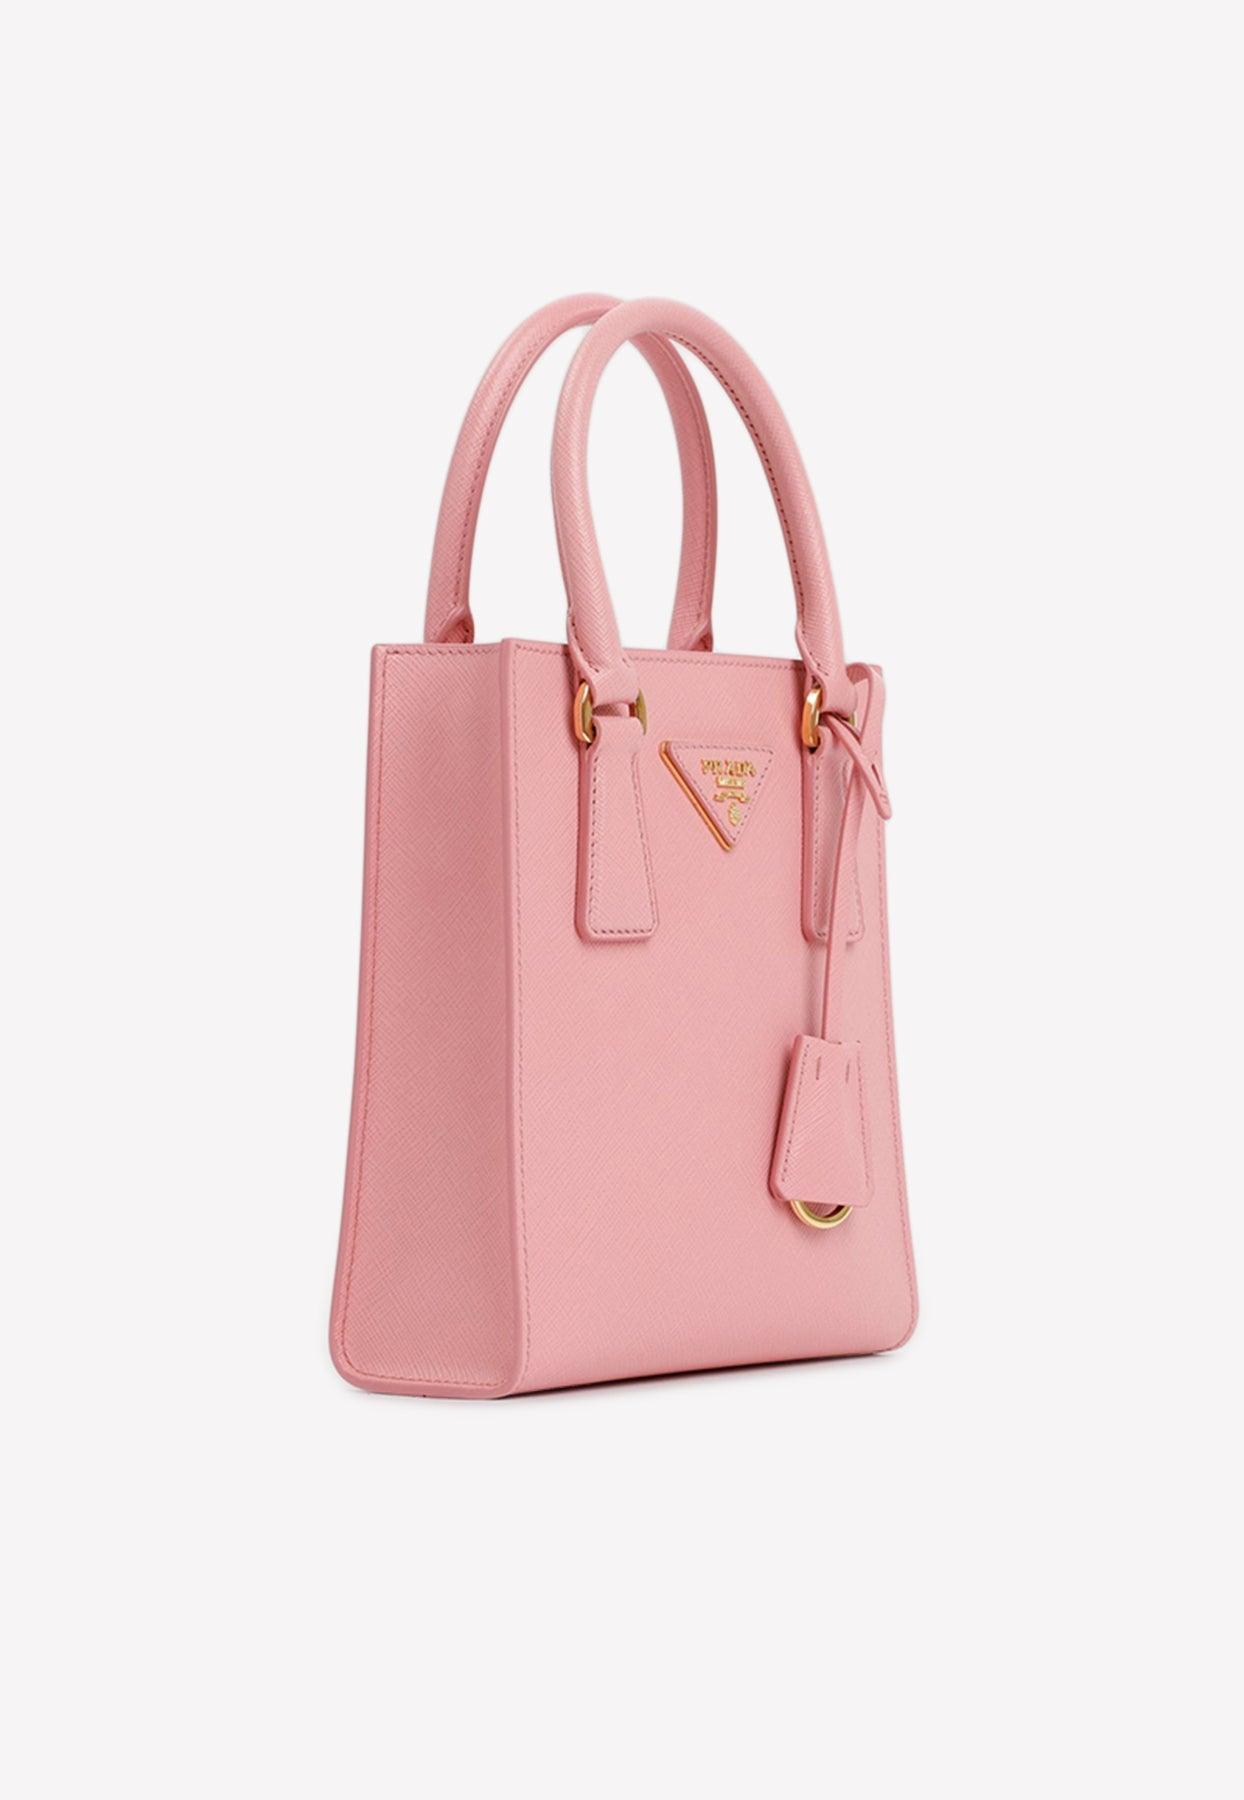 Prada Galleria Saffiano Leather Mini-bag in Pink